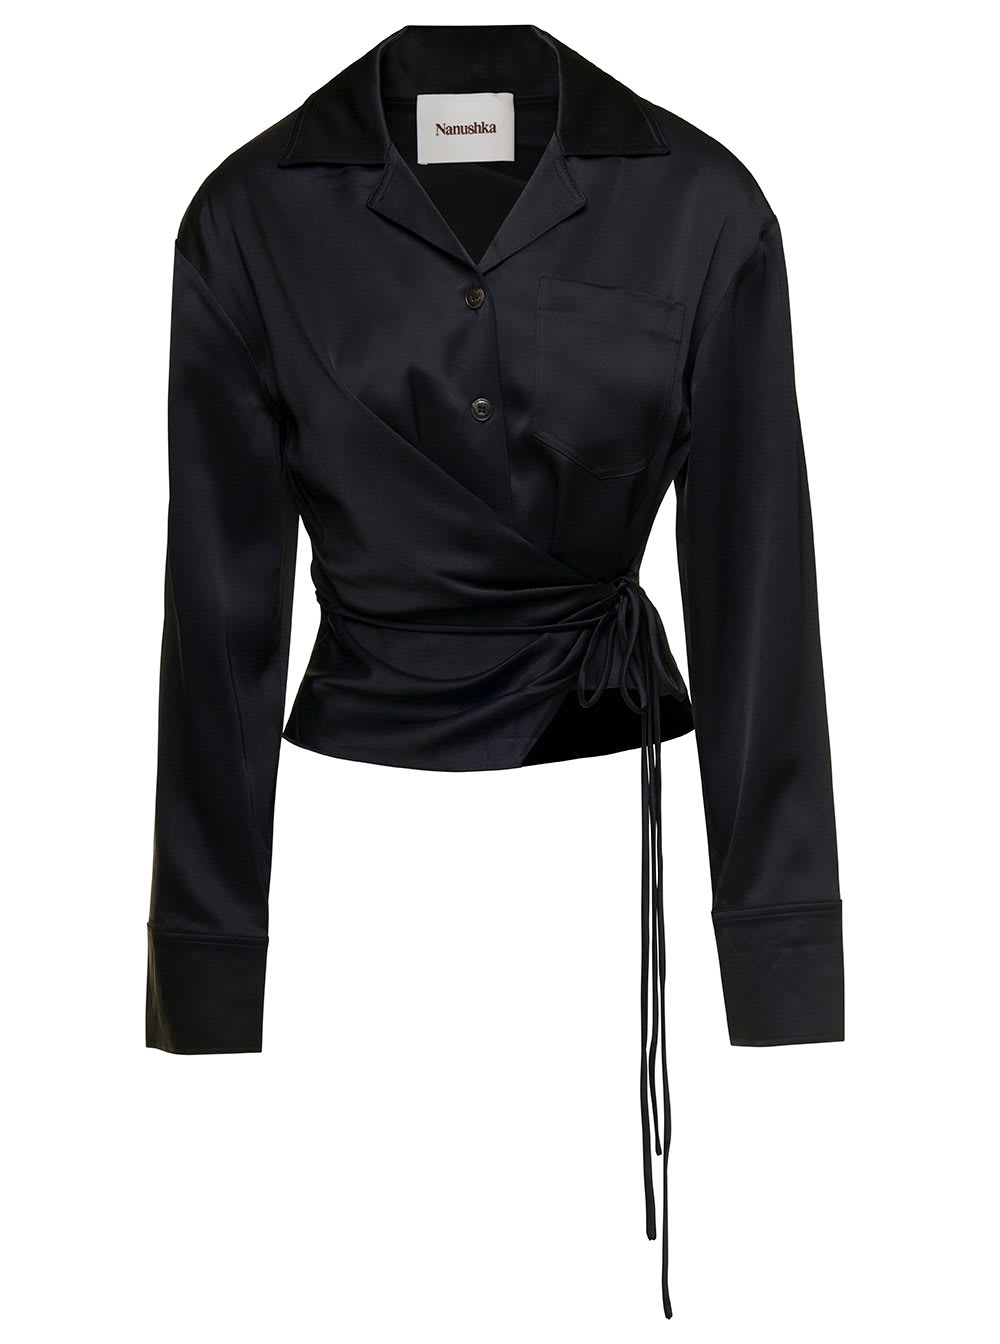 Black Shirt With Cuban Collar In Satin Fabric Woman